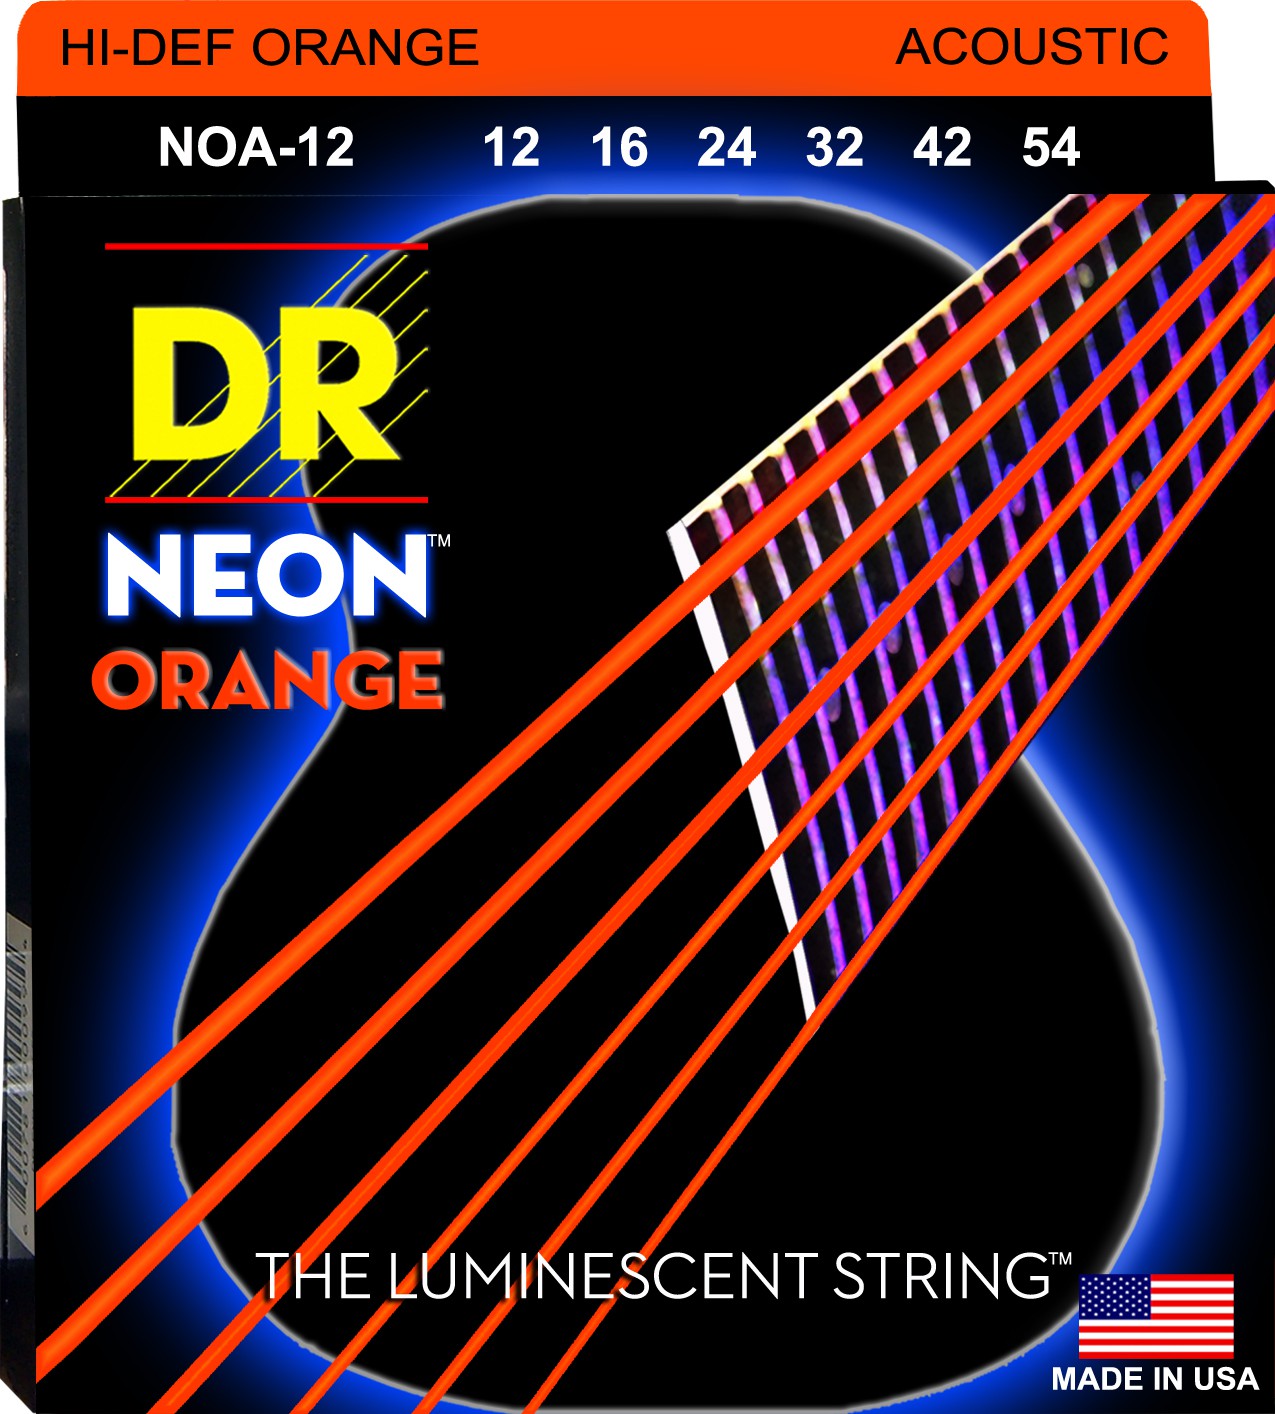 DR NEON Hi-Def Orange - NOA-12 - struny do gitary akustycznej Set, Medium, .012-.054